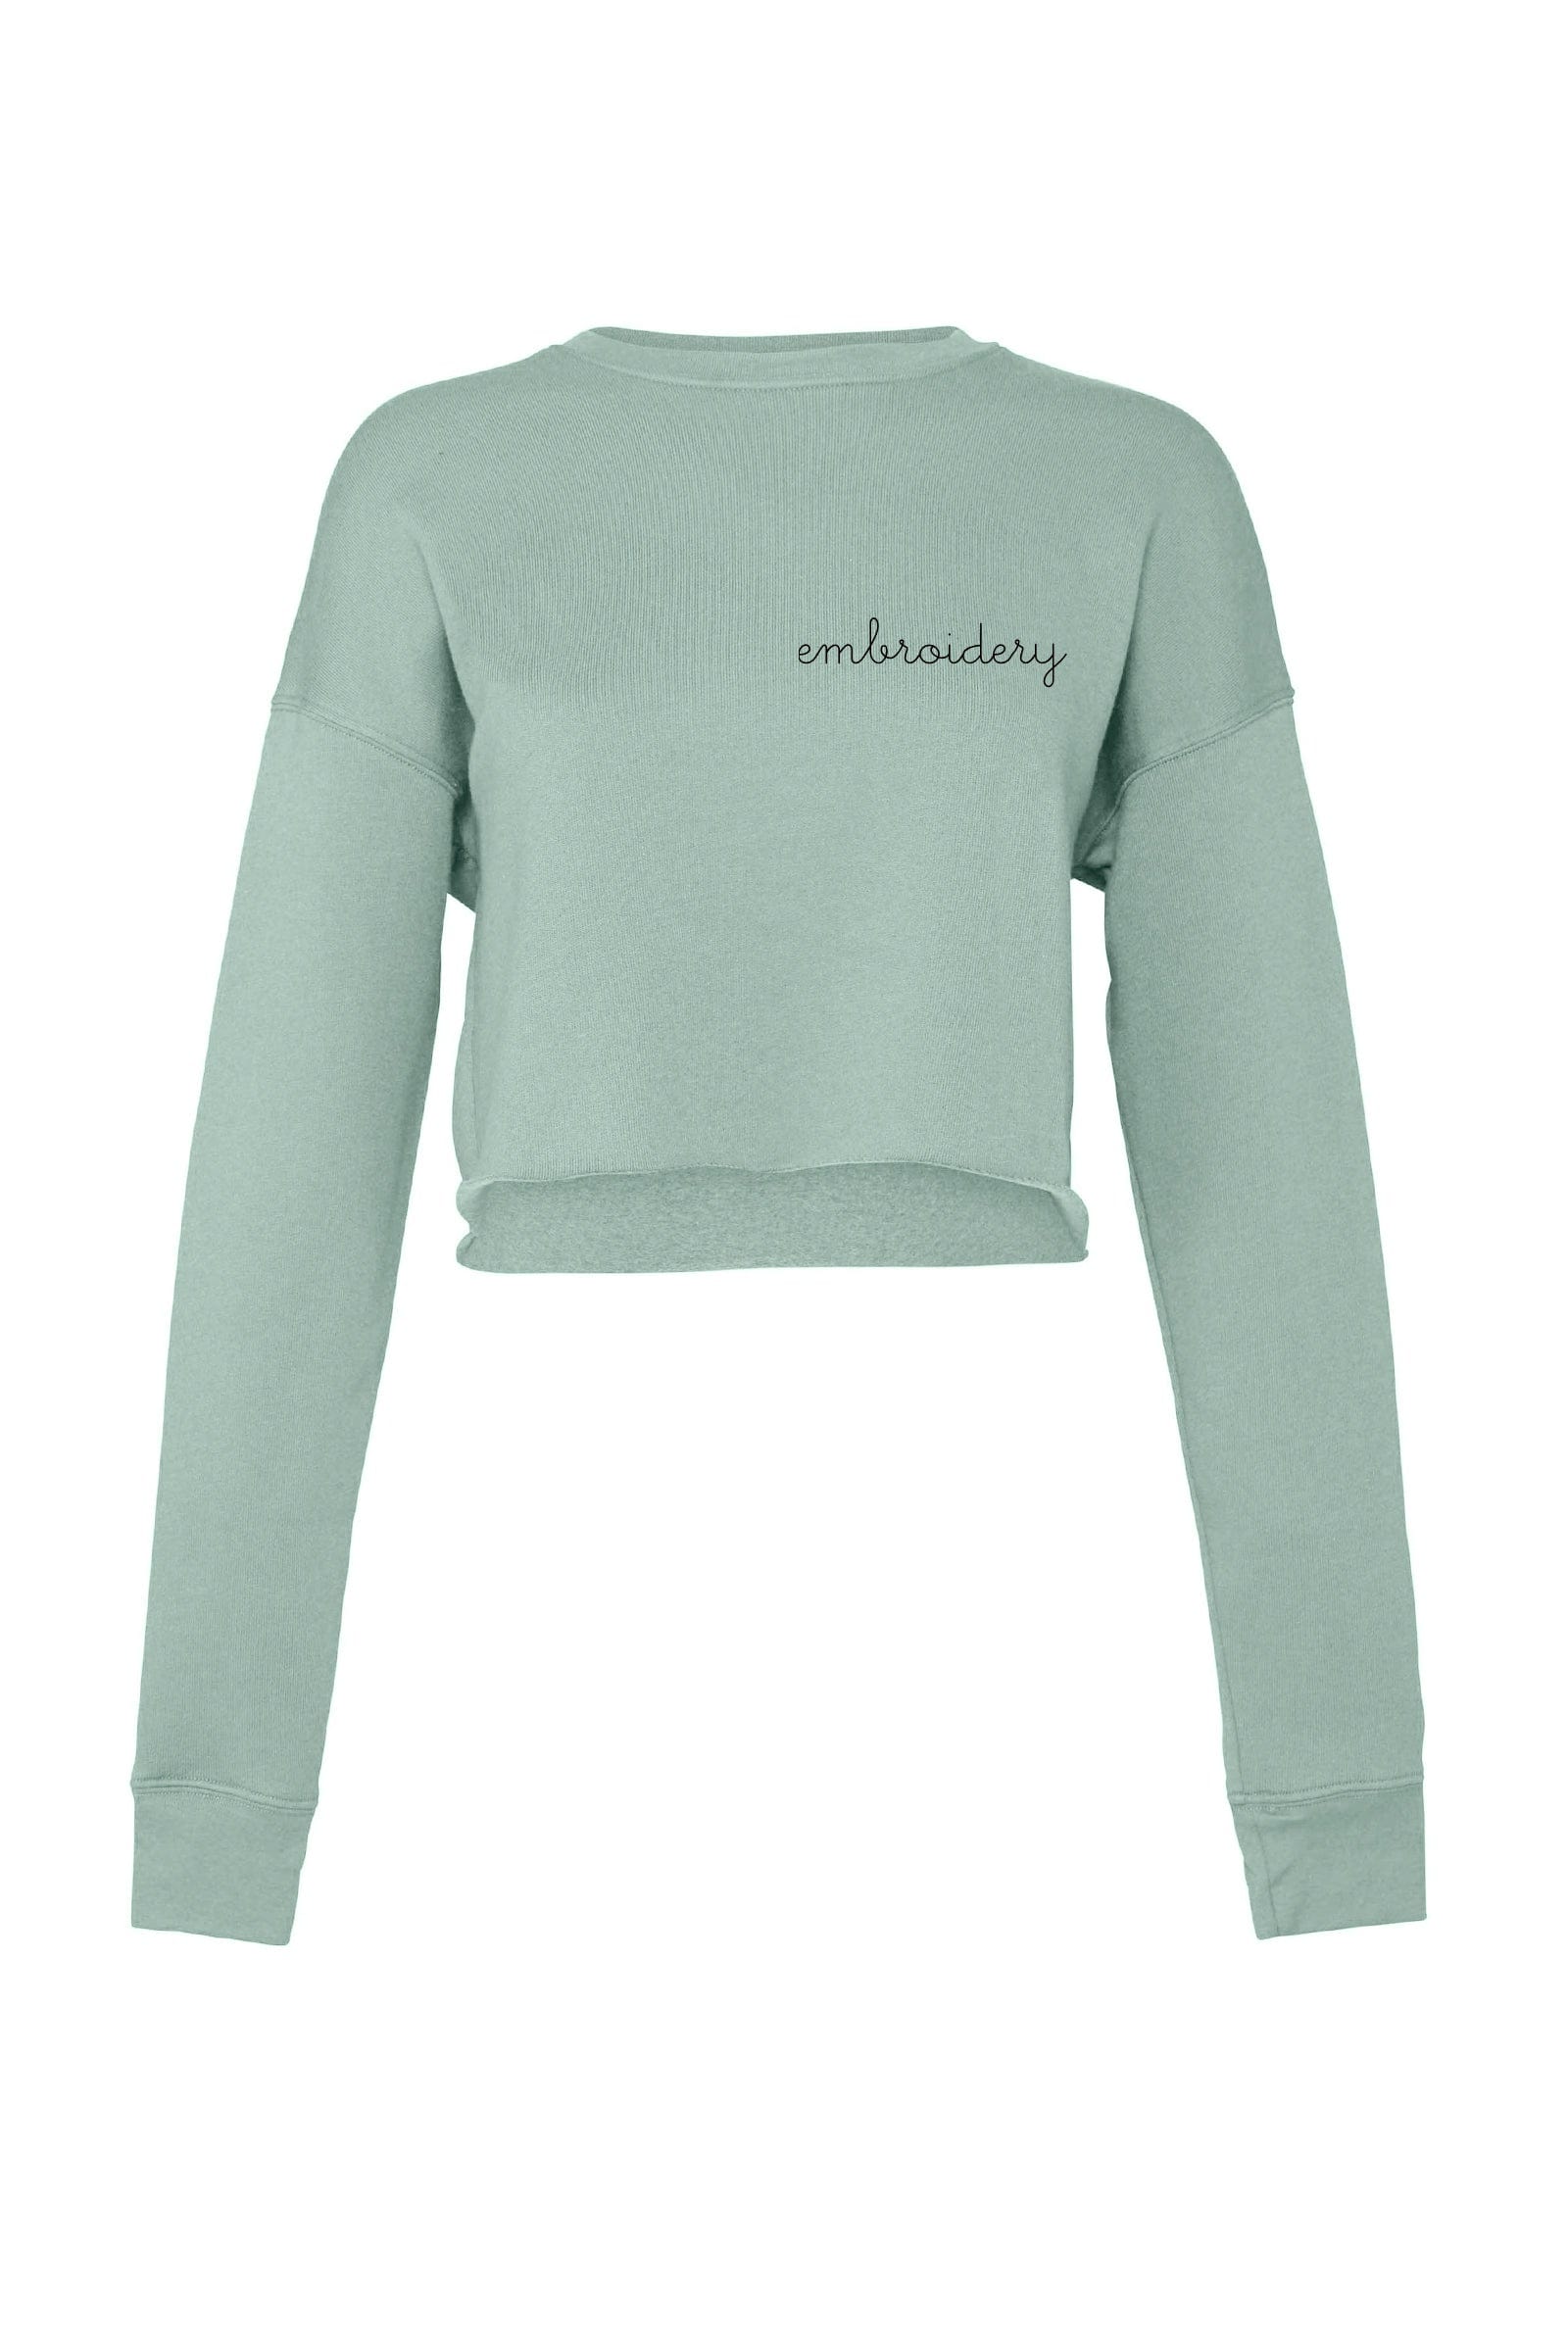 Ladies' Cropped Fleece Crewneck juju + stitch S / Black custom personalized script embroidered cropped sweatshirt